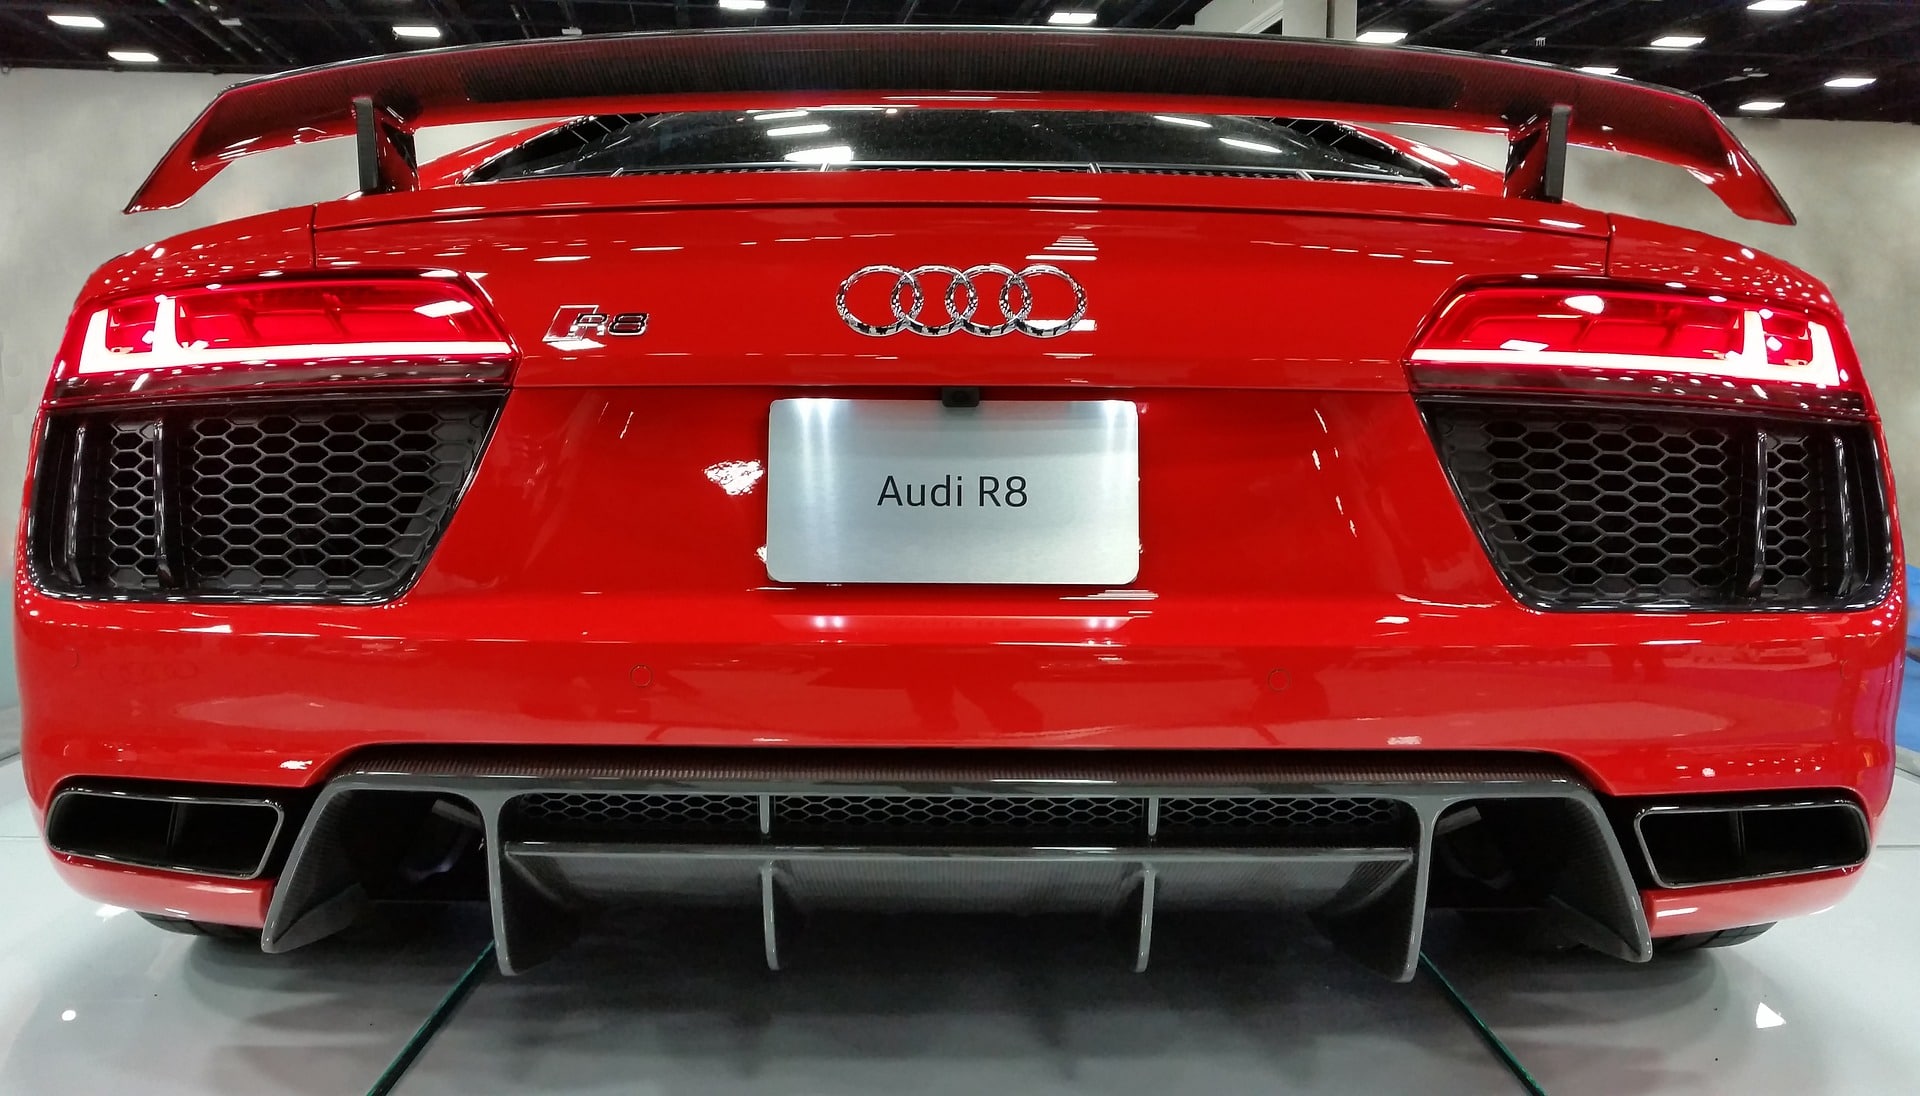 Audi r8, reasons to get an Audi r8, pros and cons of Audi r8, luxury car, sports car, Ferrari, Lamborghini, 